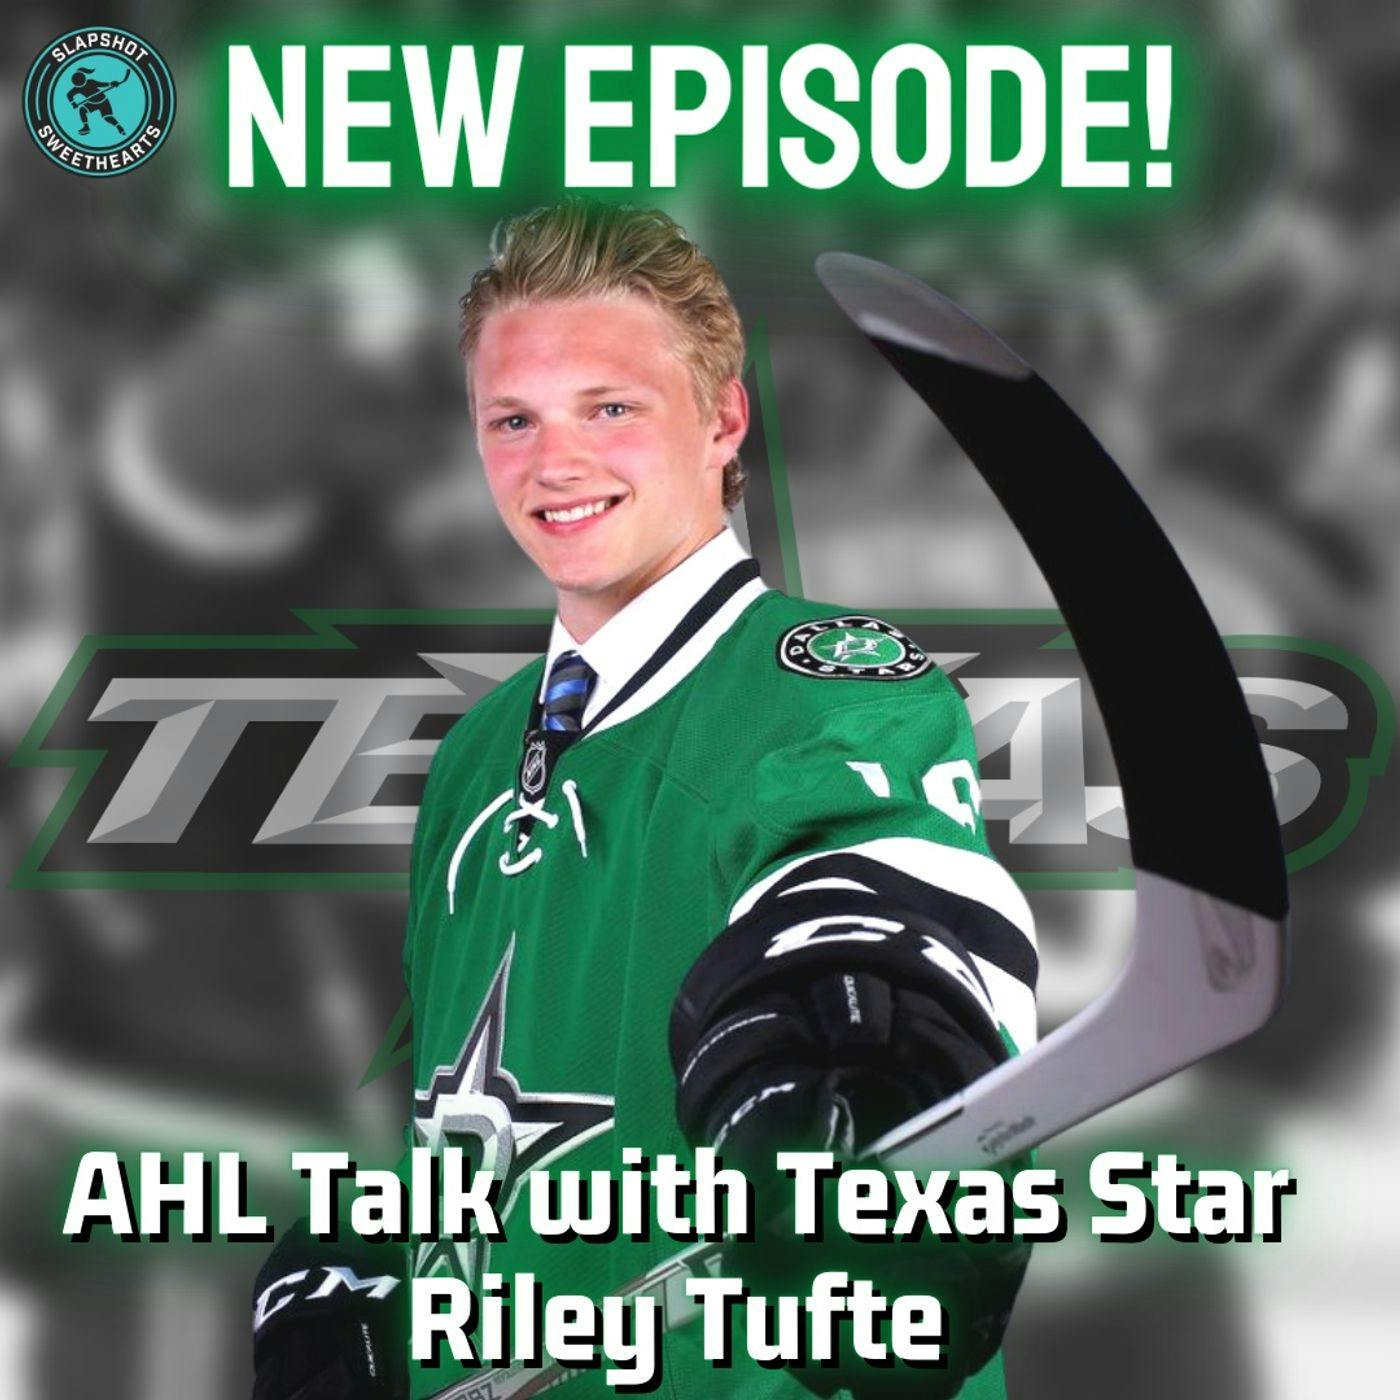 AHL Talk with Texas Stars Forward and Dallas Stars Prospect Riley Tufte